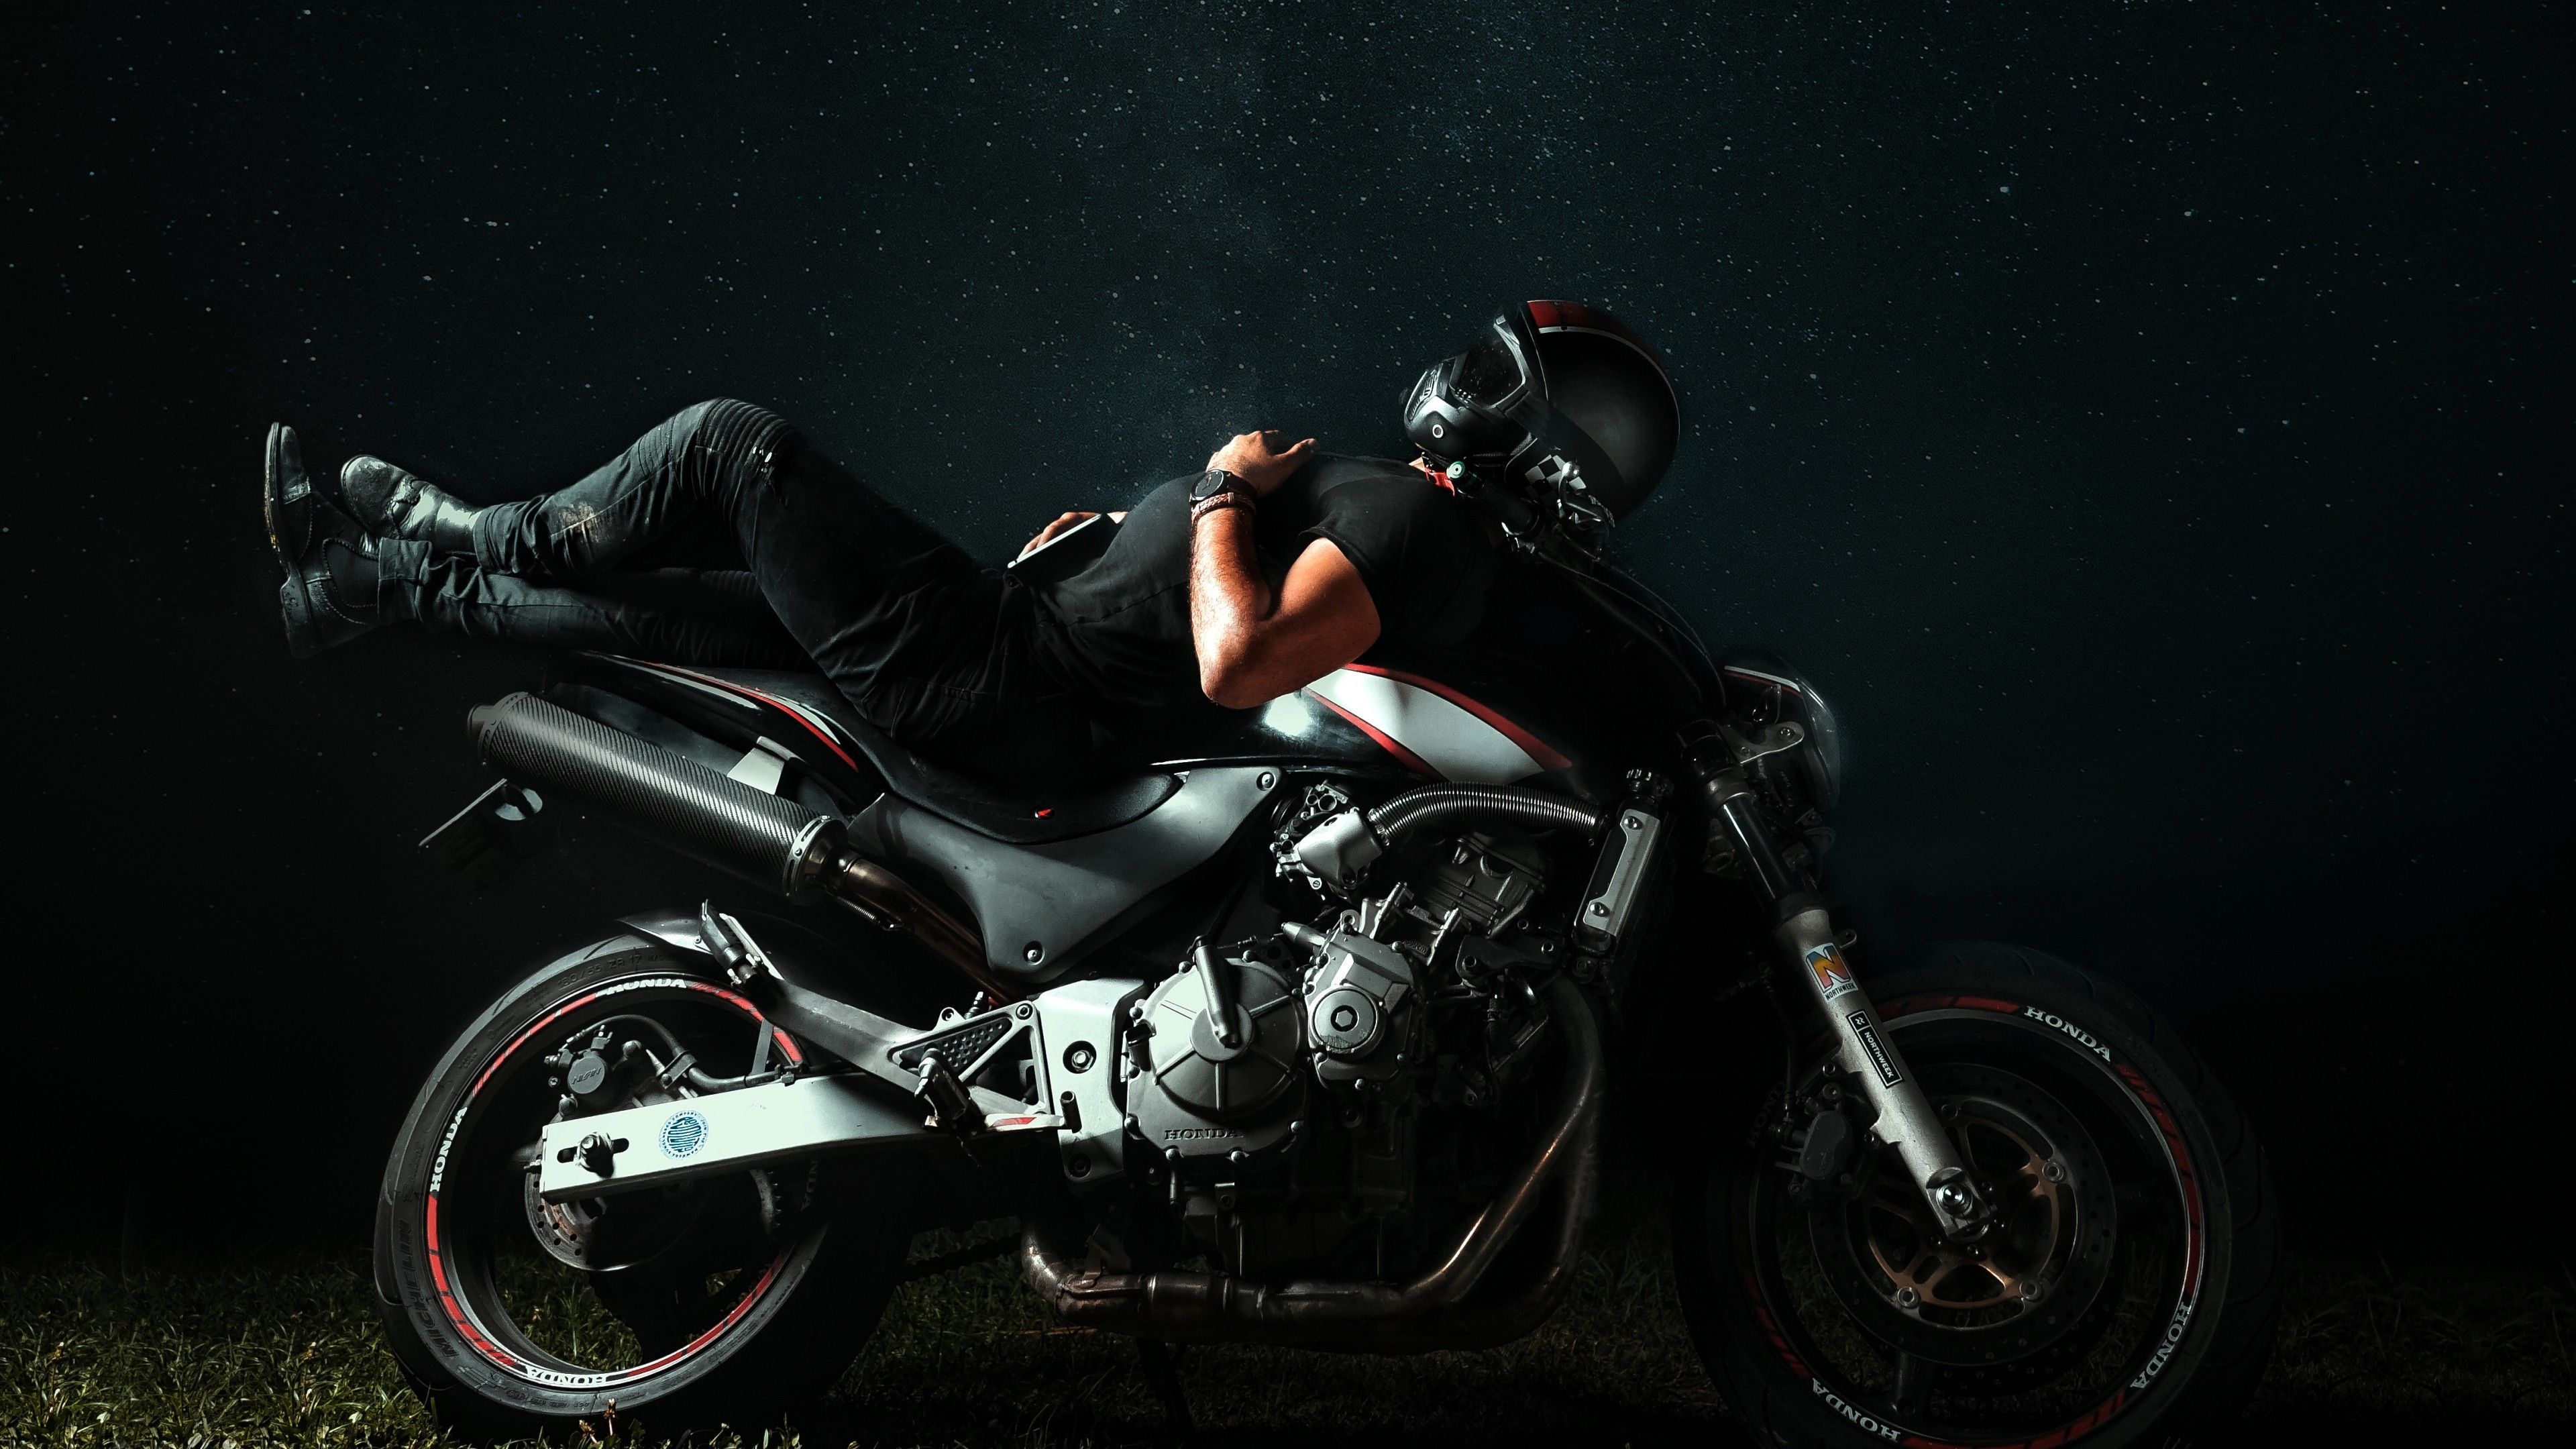 Biker 4K Wallpaper, Night, Starry sky, Honda, Relax, Photography